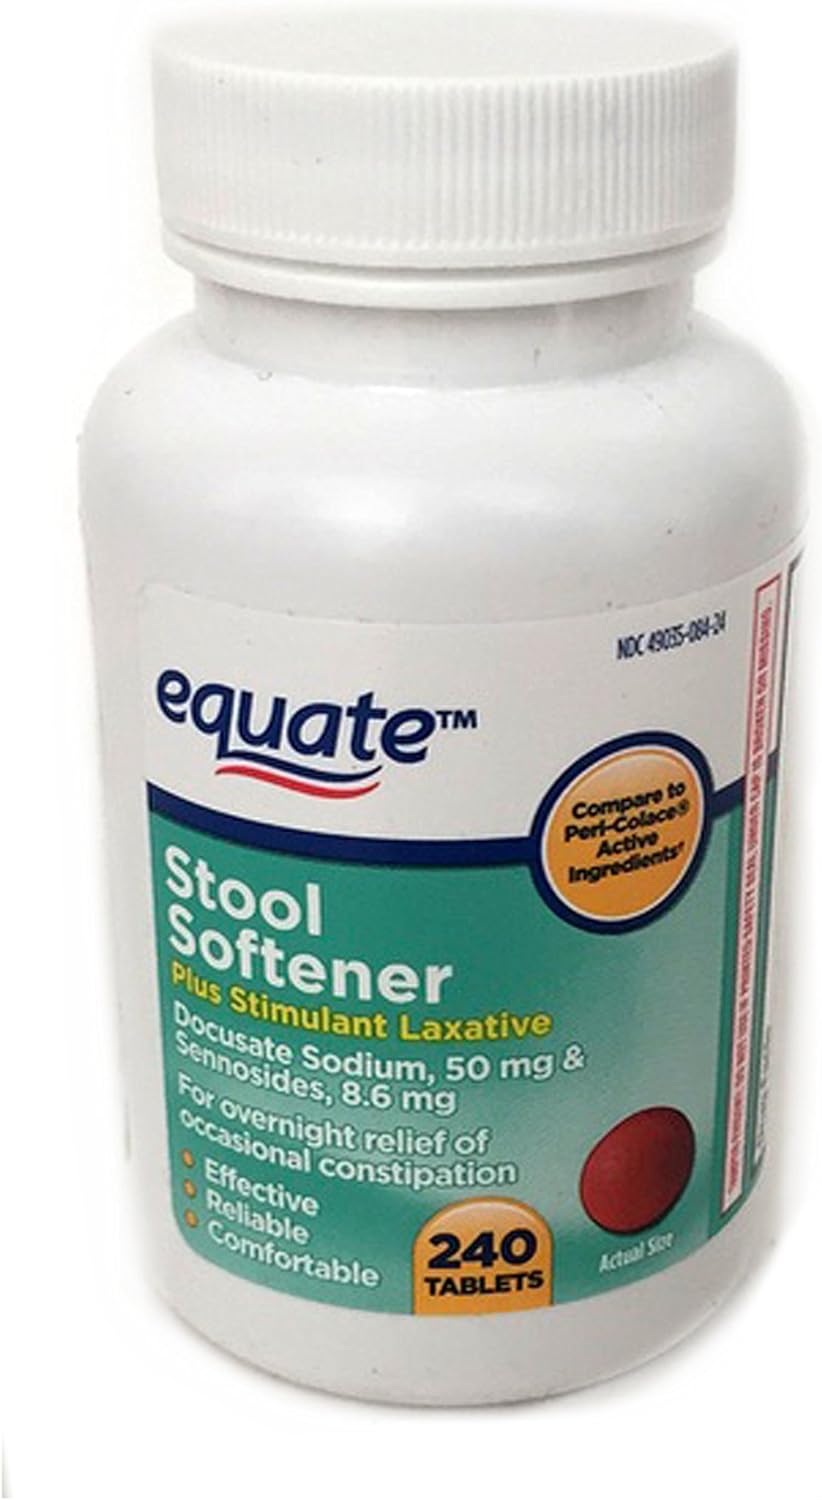 Equate - Stool Softener Plus Stimulant Laxative, 240 Tablets (Compare 3.8 Ounces